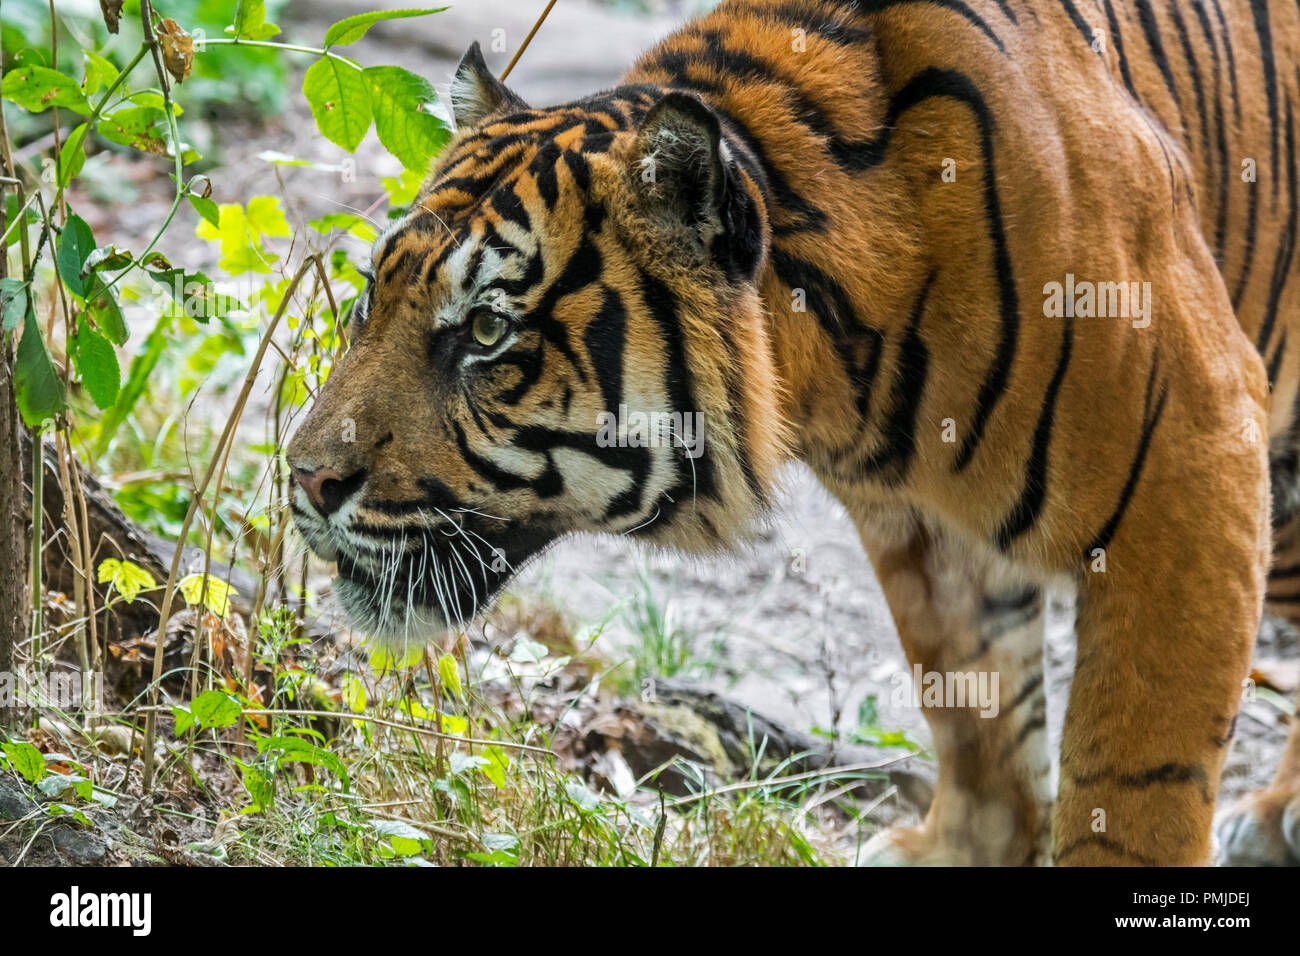 La tigre di Sumatra / Sunda isola tiger (Panthera tigris sondaica / Panthera tigris sumatrae) nativi di Sumatra, Indonesia Foto Stock